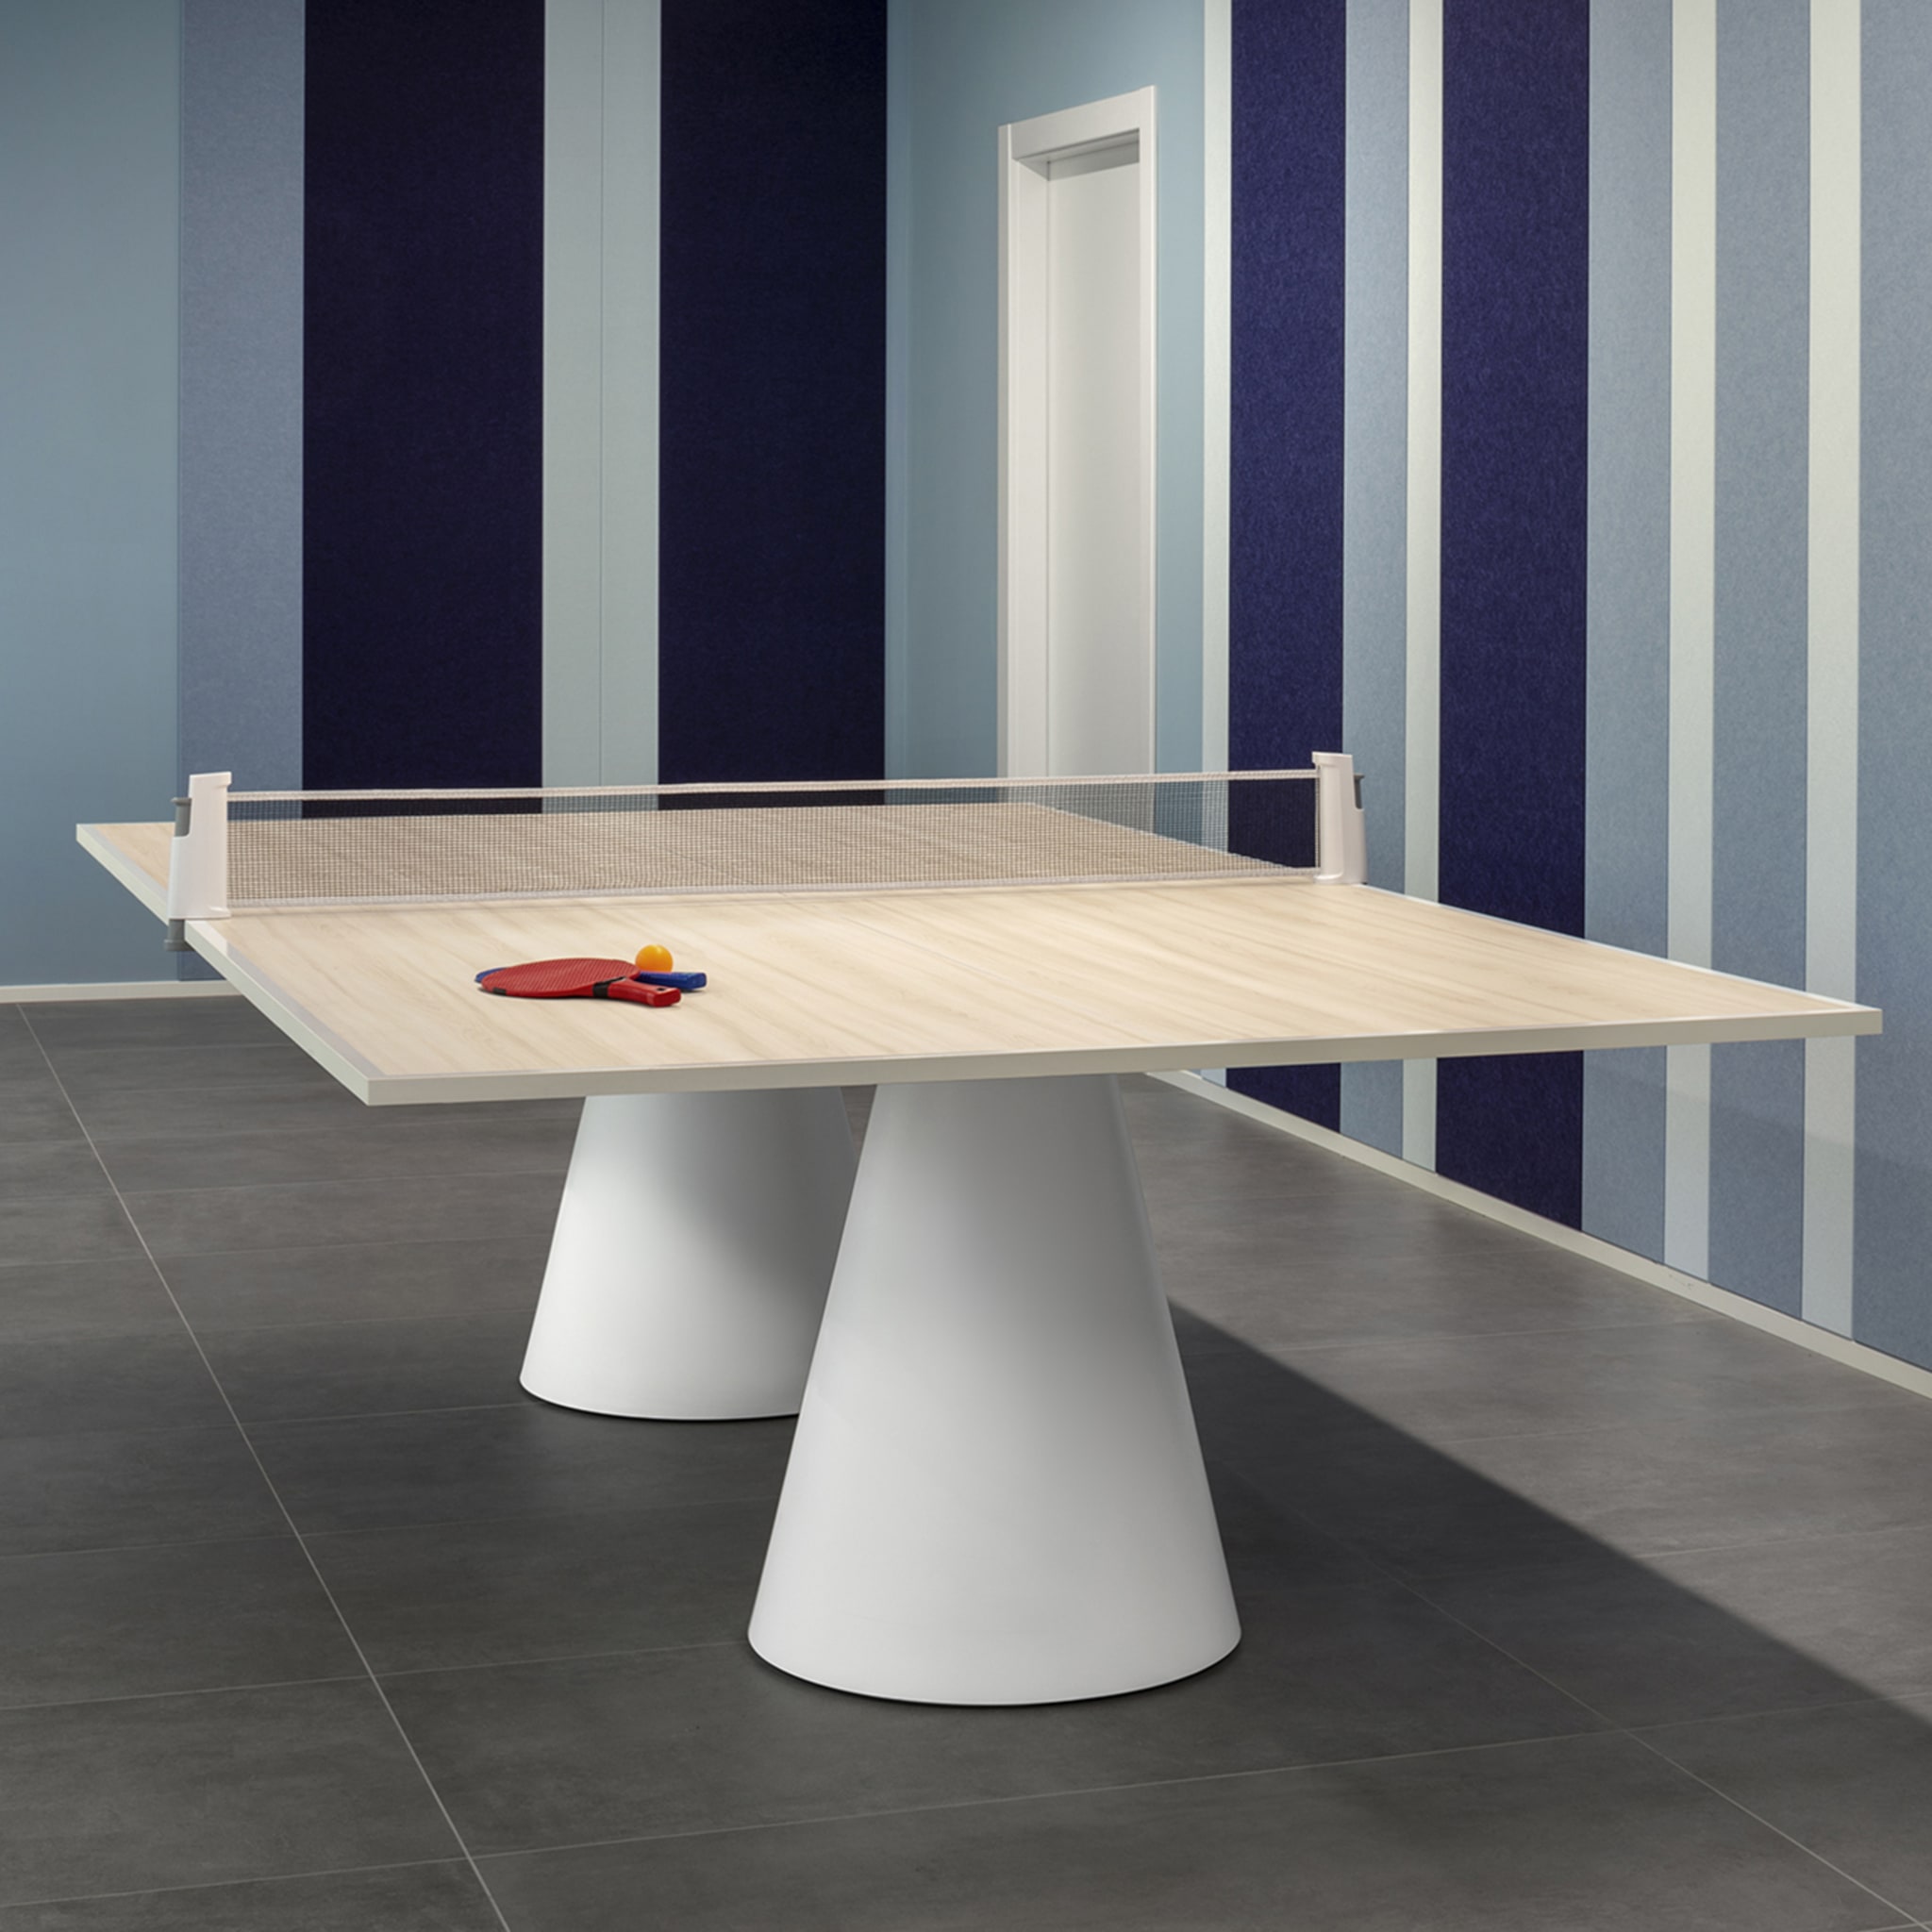 Dada Ping Pong Table by Basaglia + Rota Nodari - Alternative view 5